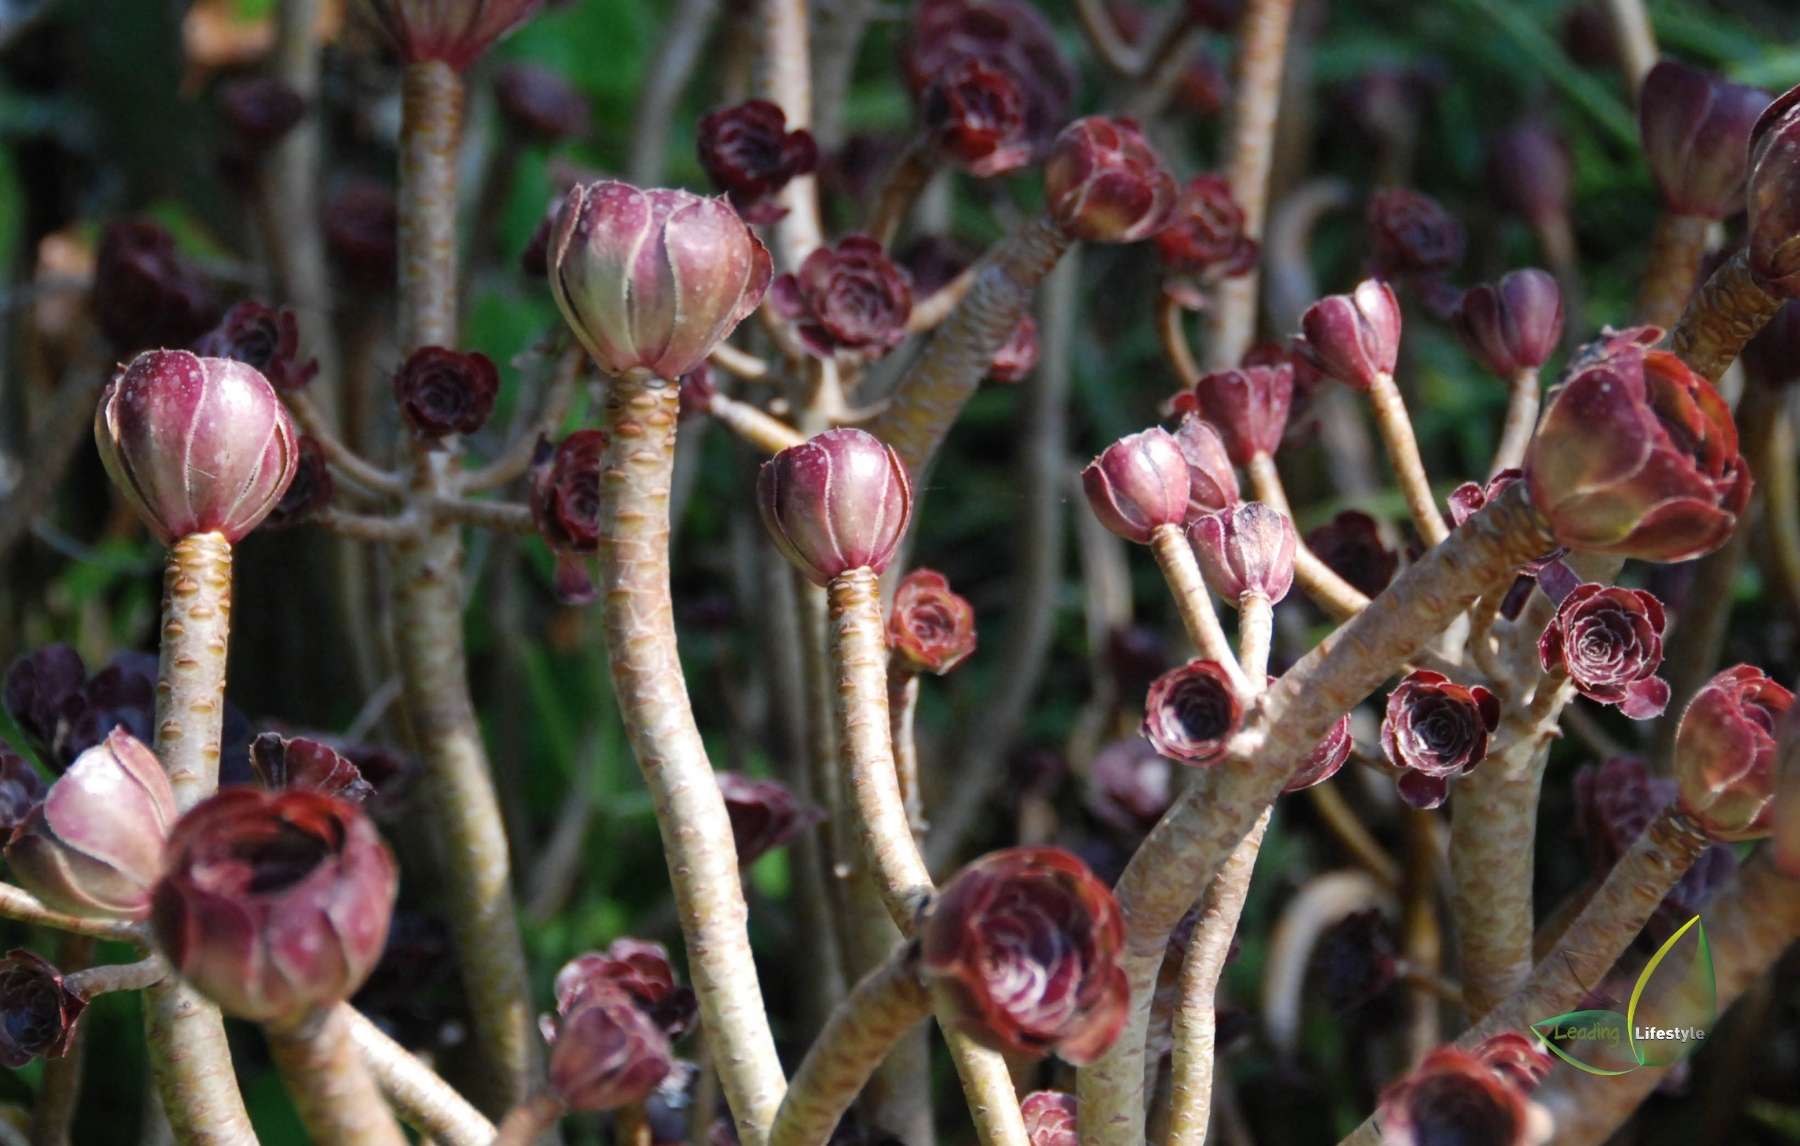 Black Rose Succulent propagate 1 Leading Lifestyle PathosBay